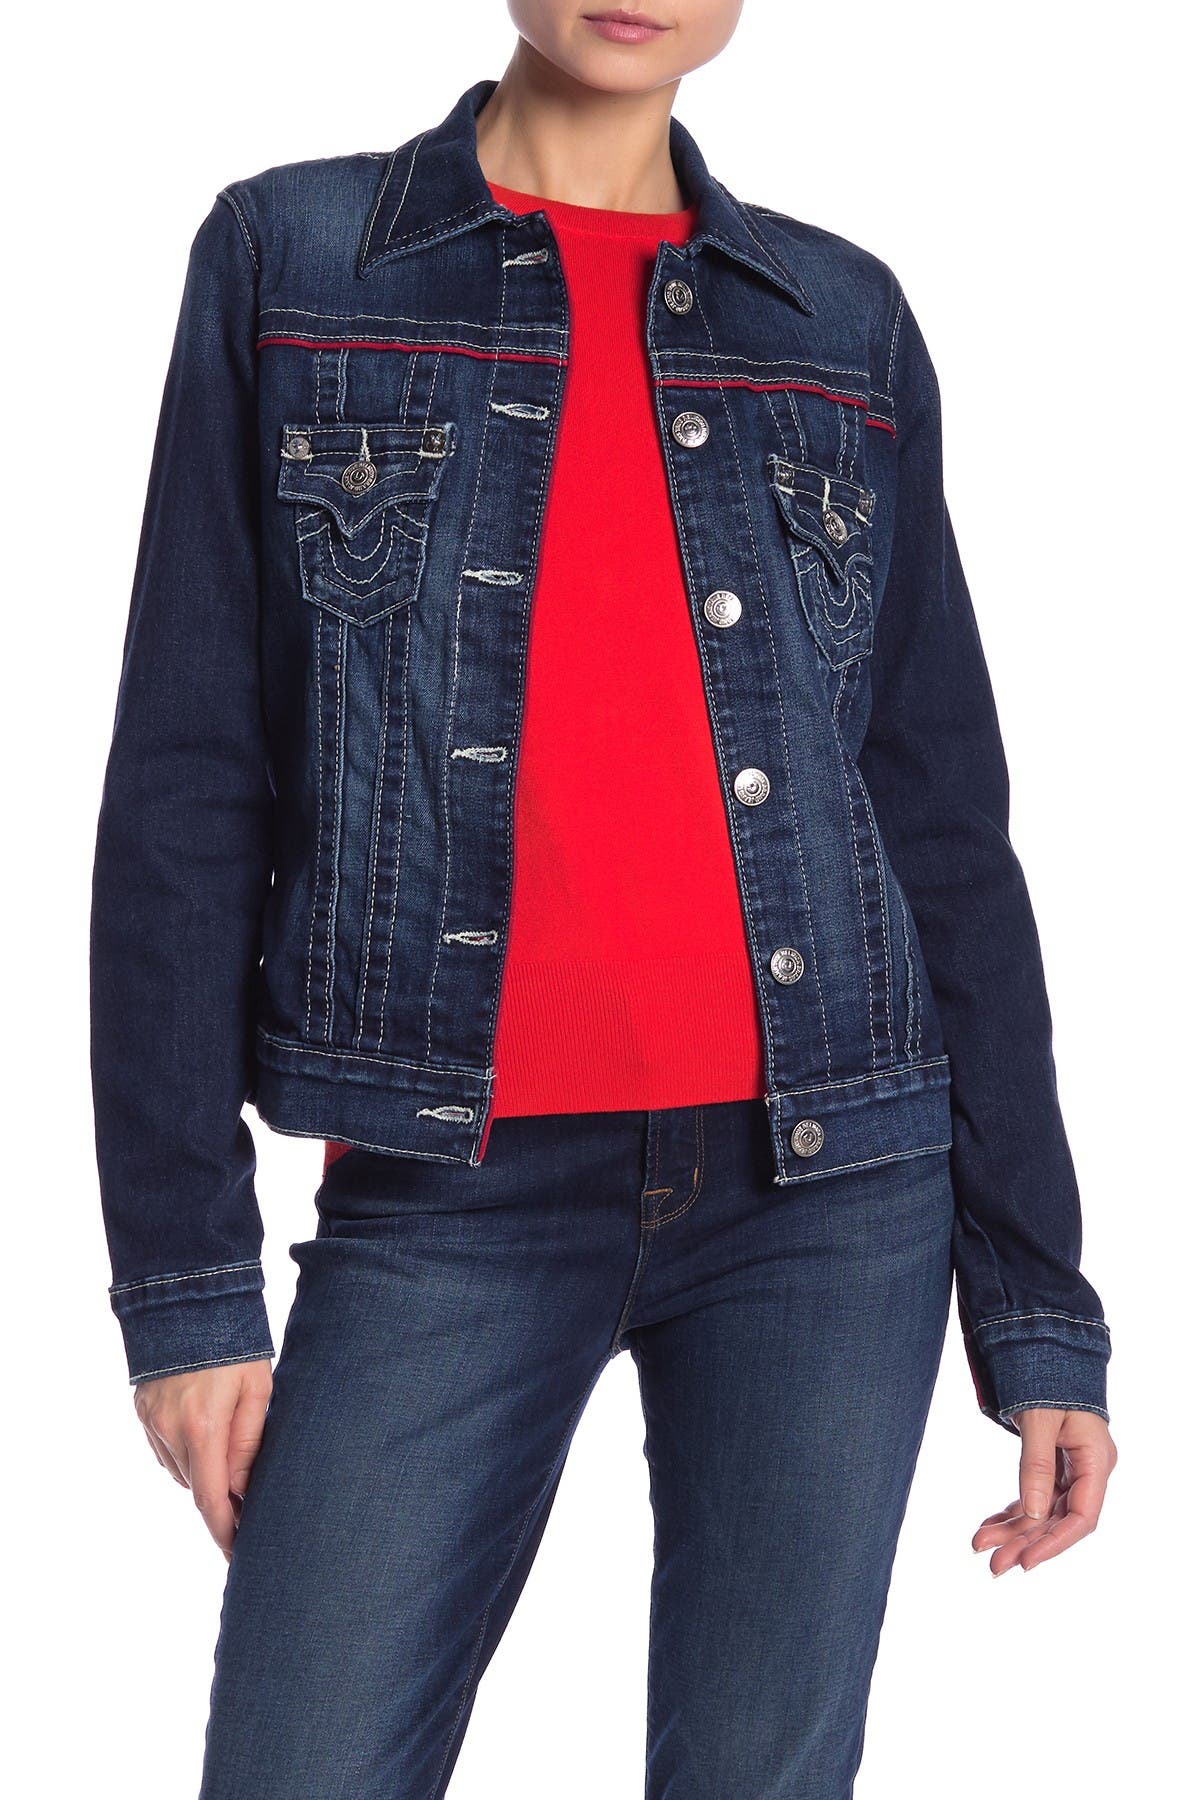 true religion red jean jacket